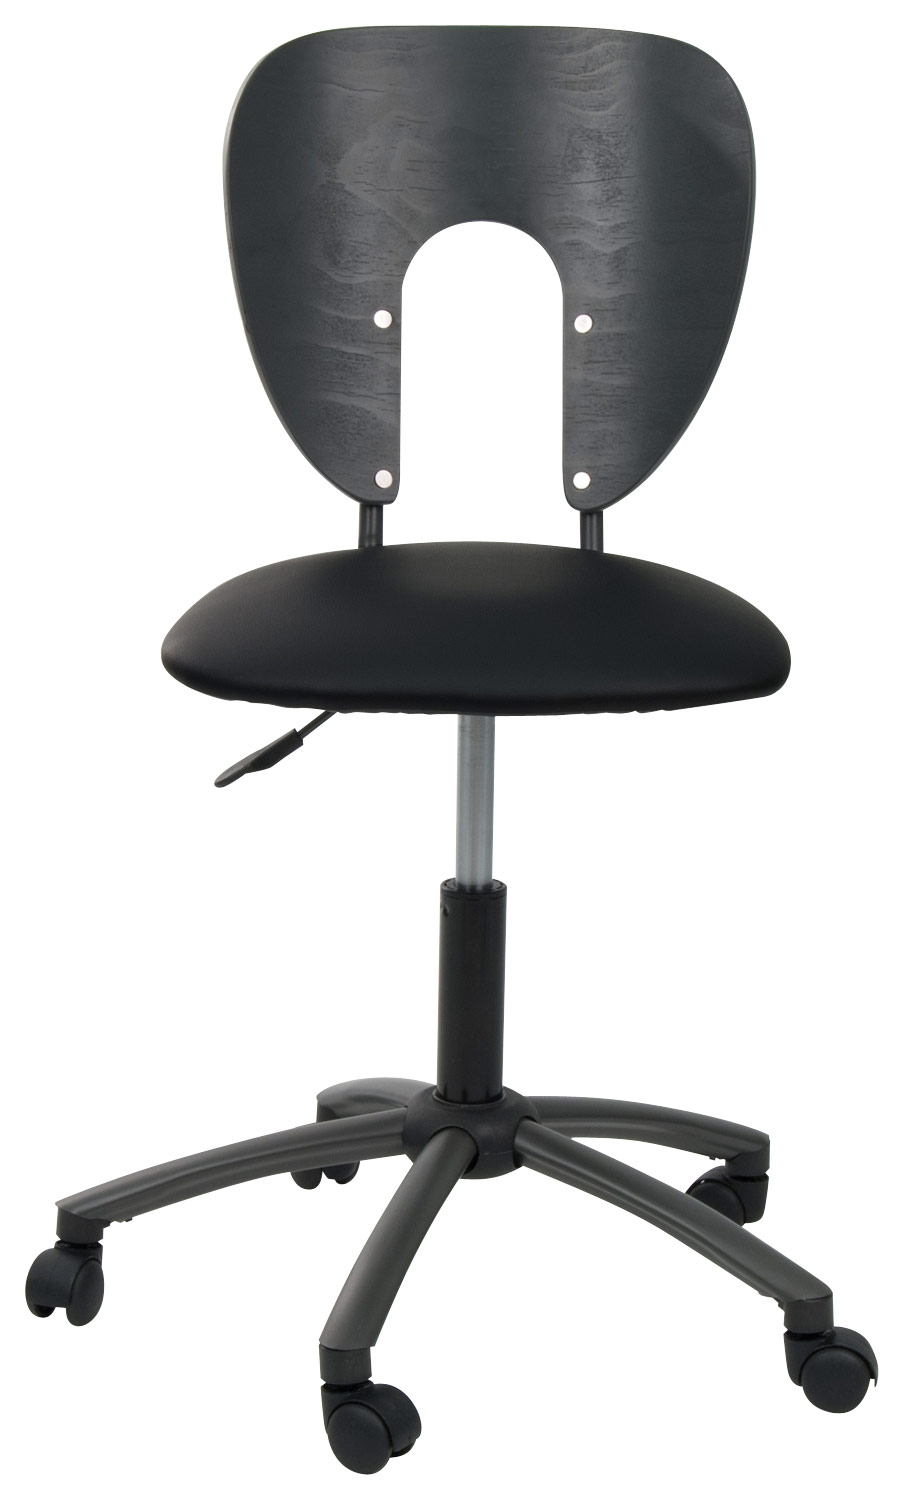 Studio Designs - Futura Chair - Pewter